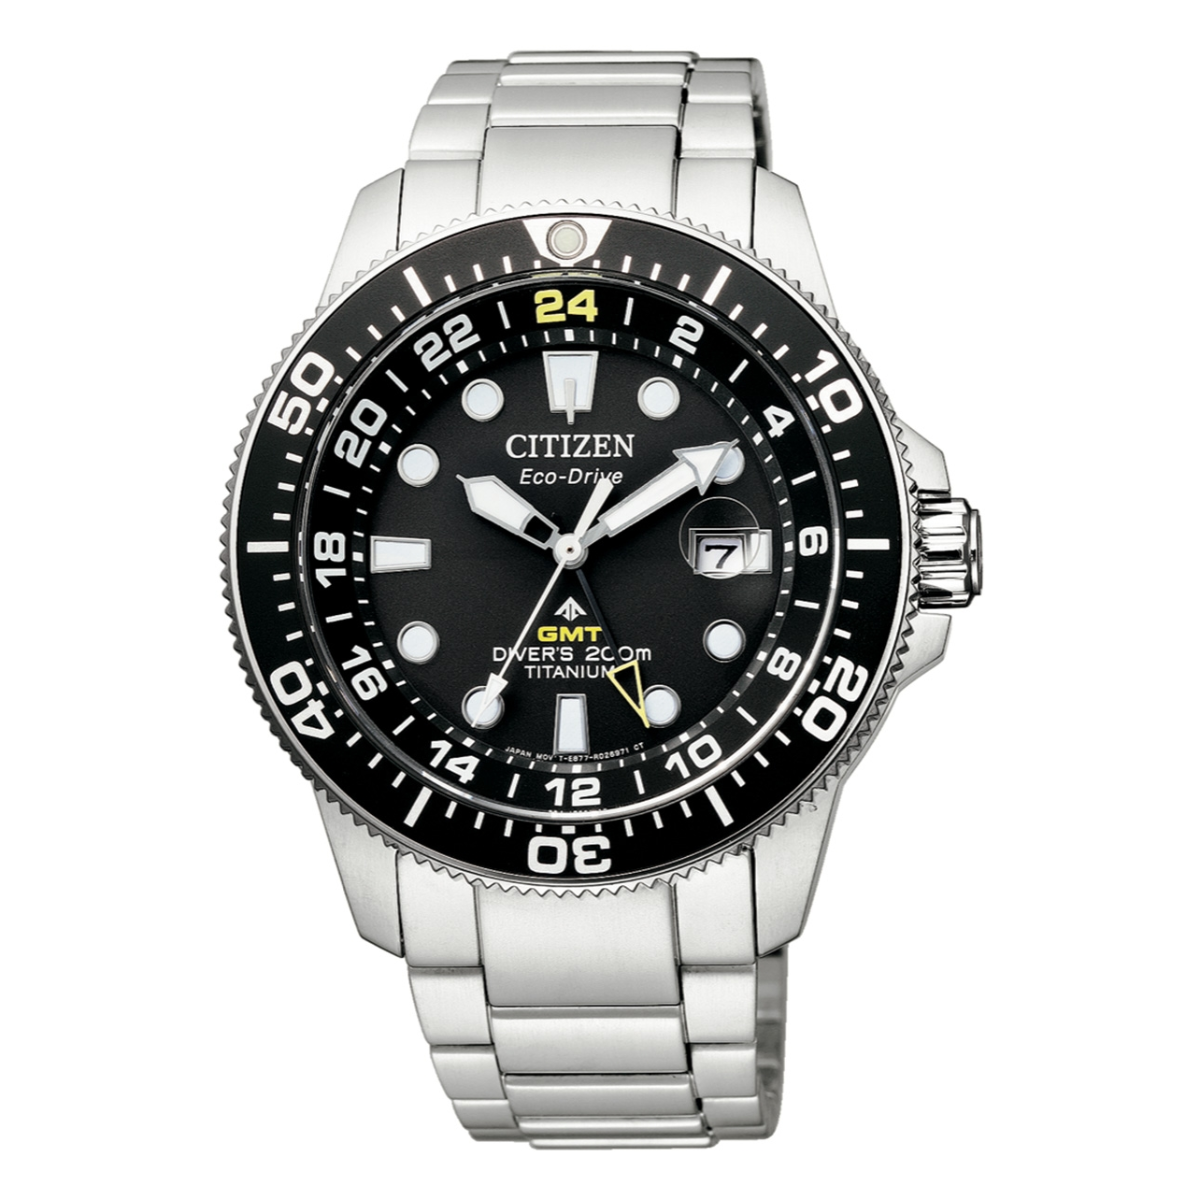 Citizen Promaster Marine GMT 200m Eco-Drive Men's Watch BJ7110-89E